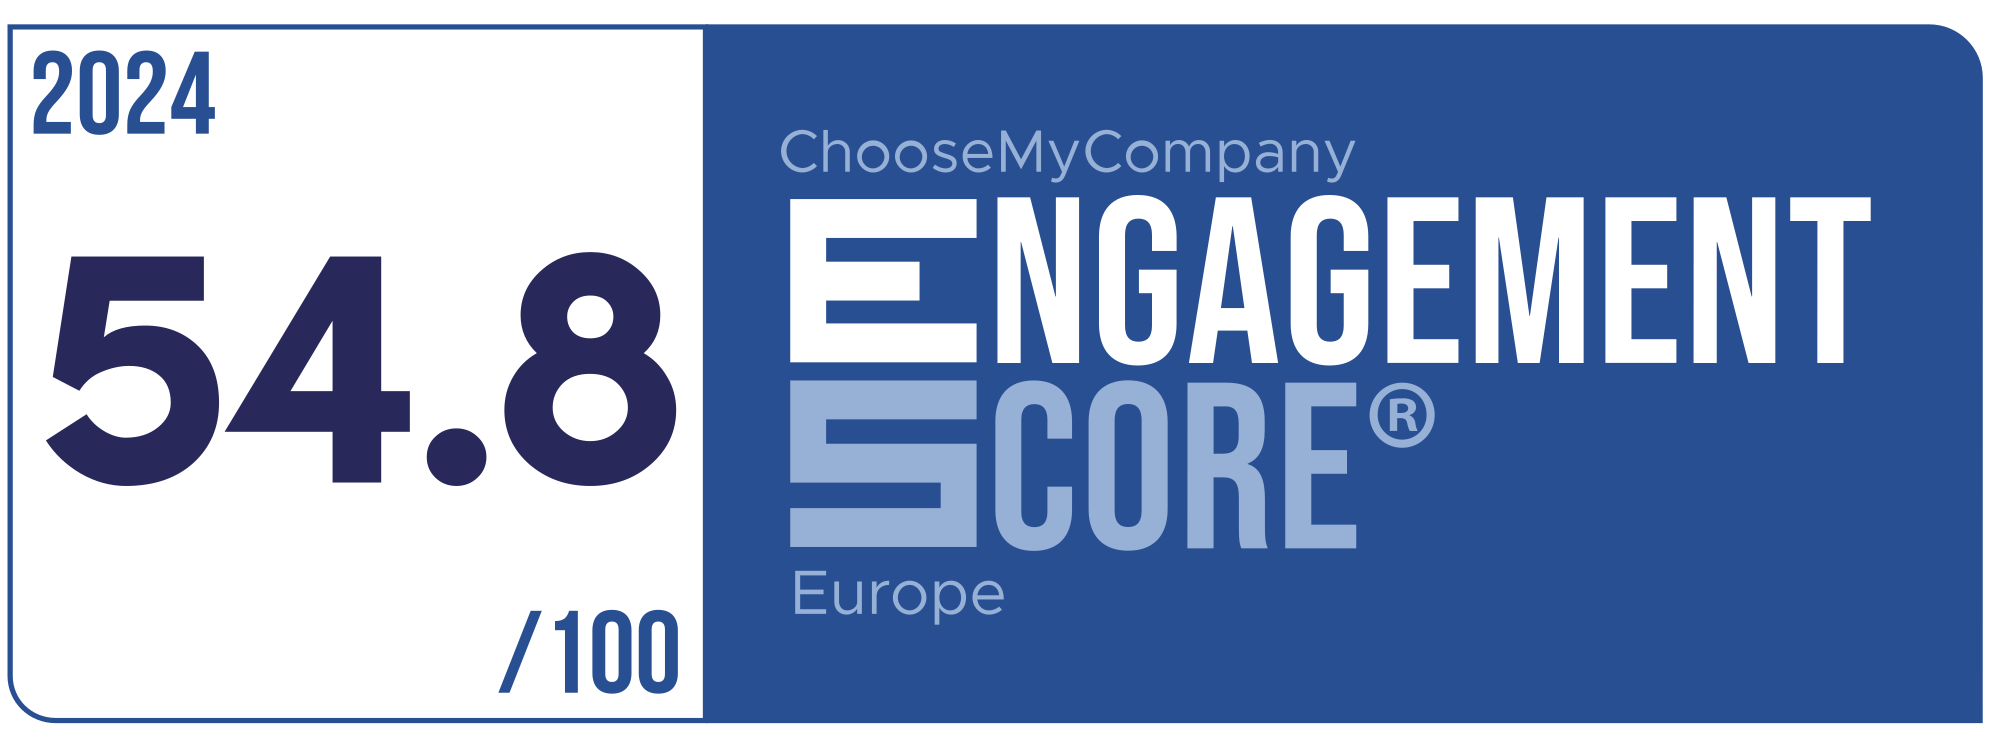 Label Engagement Score 2024 Europe